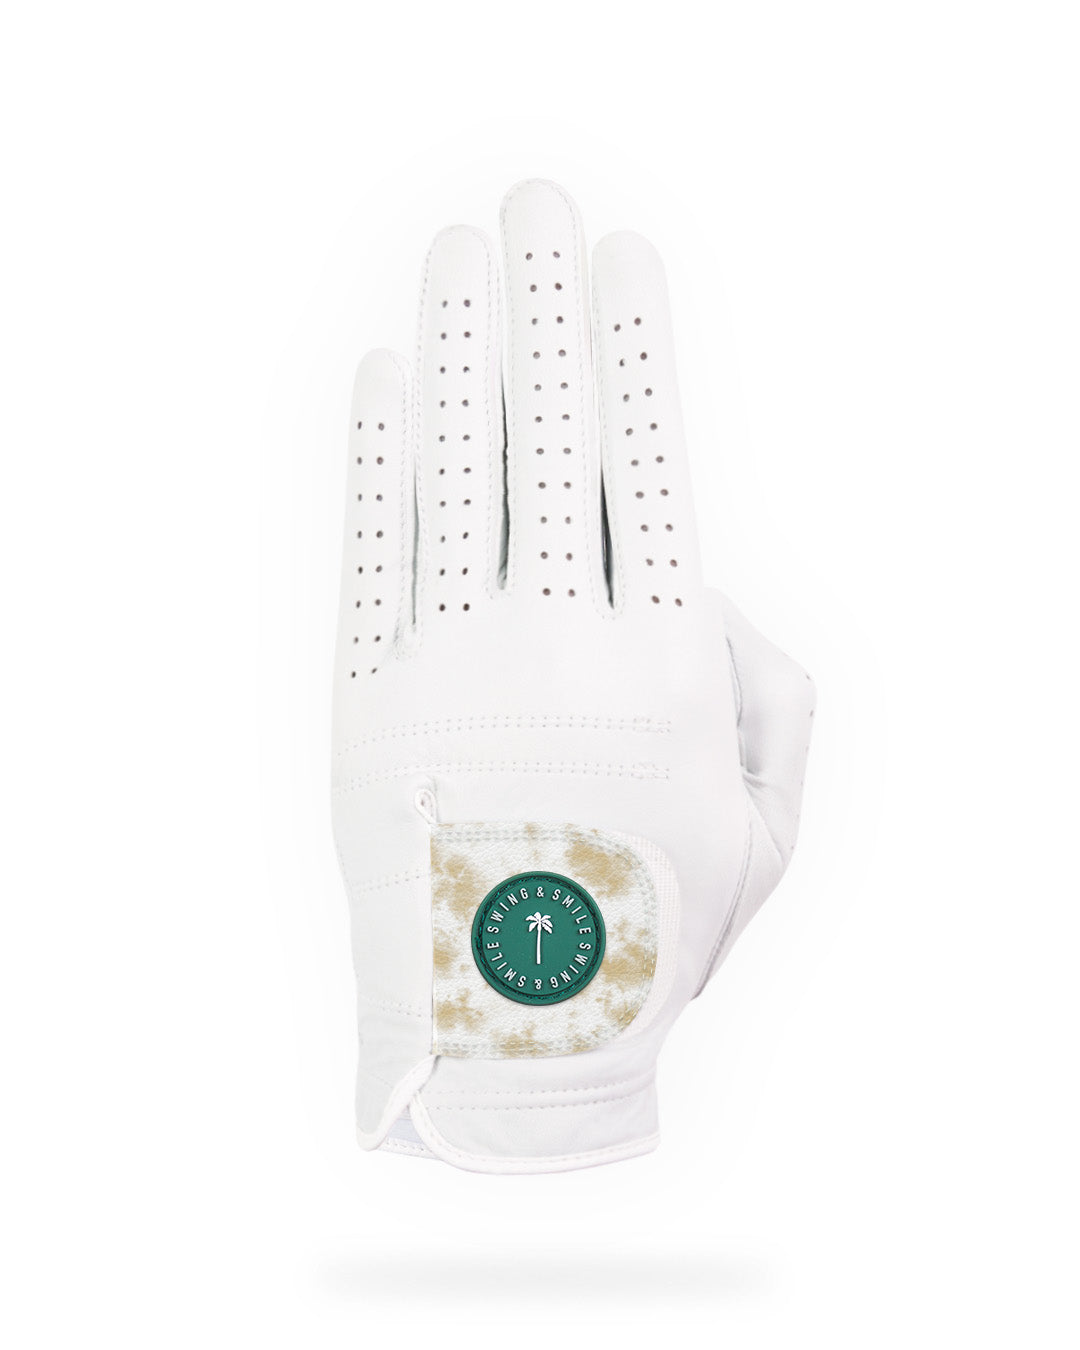 Women's S&S Glove - Palm Golf Co.